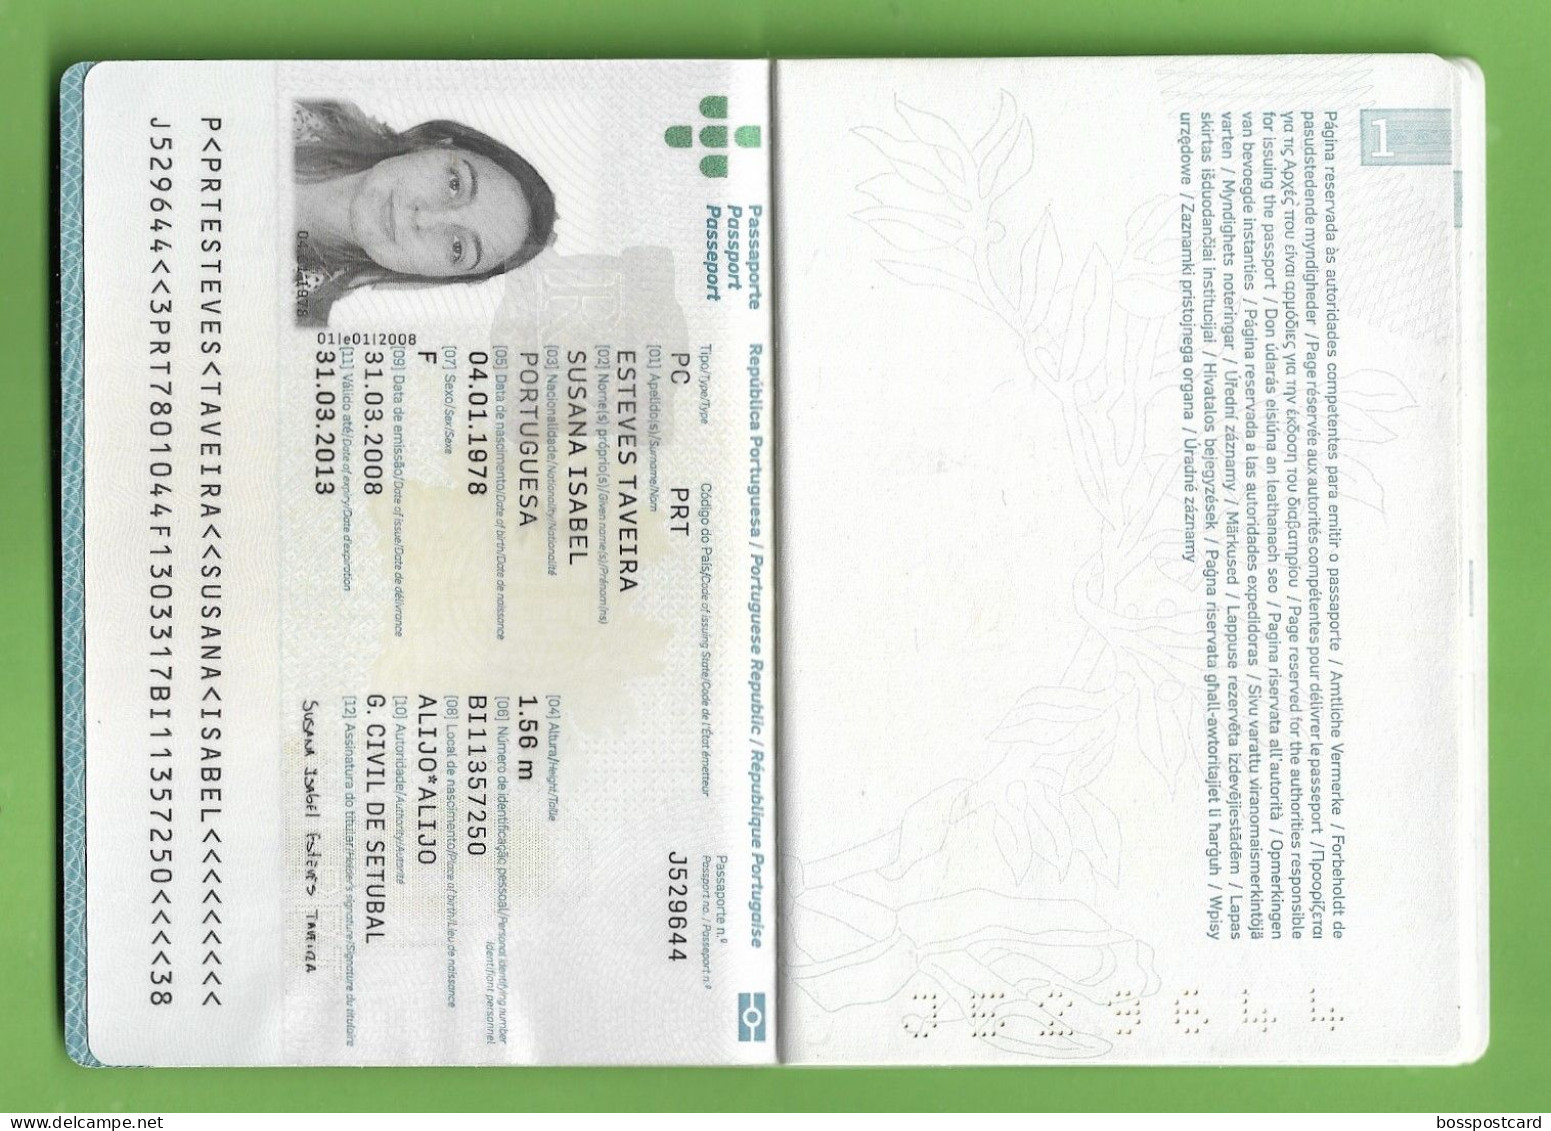 Portuga - Biometric Passport - Passeporte - Reisepass - Dominican Republic - Ohne Zuordnung